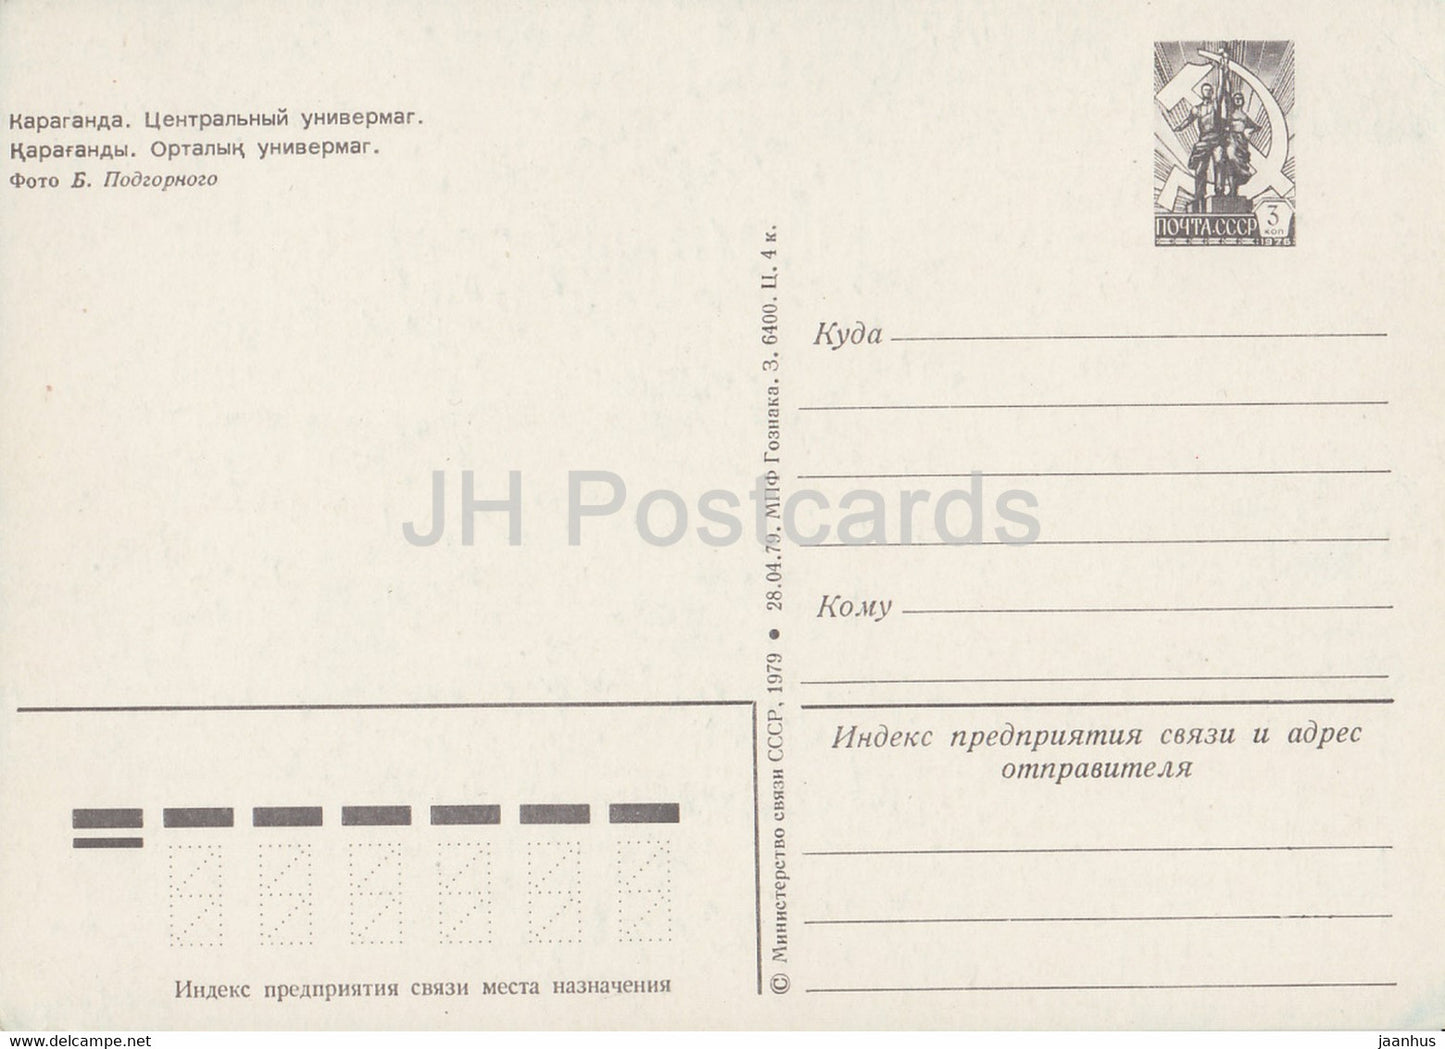 Karaganda - Karagandy - Grand magasin central - entier postal - 1979 - Kazakhstan URSS - inutilisé